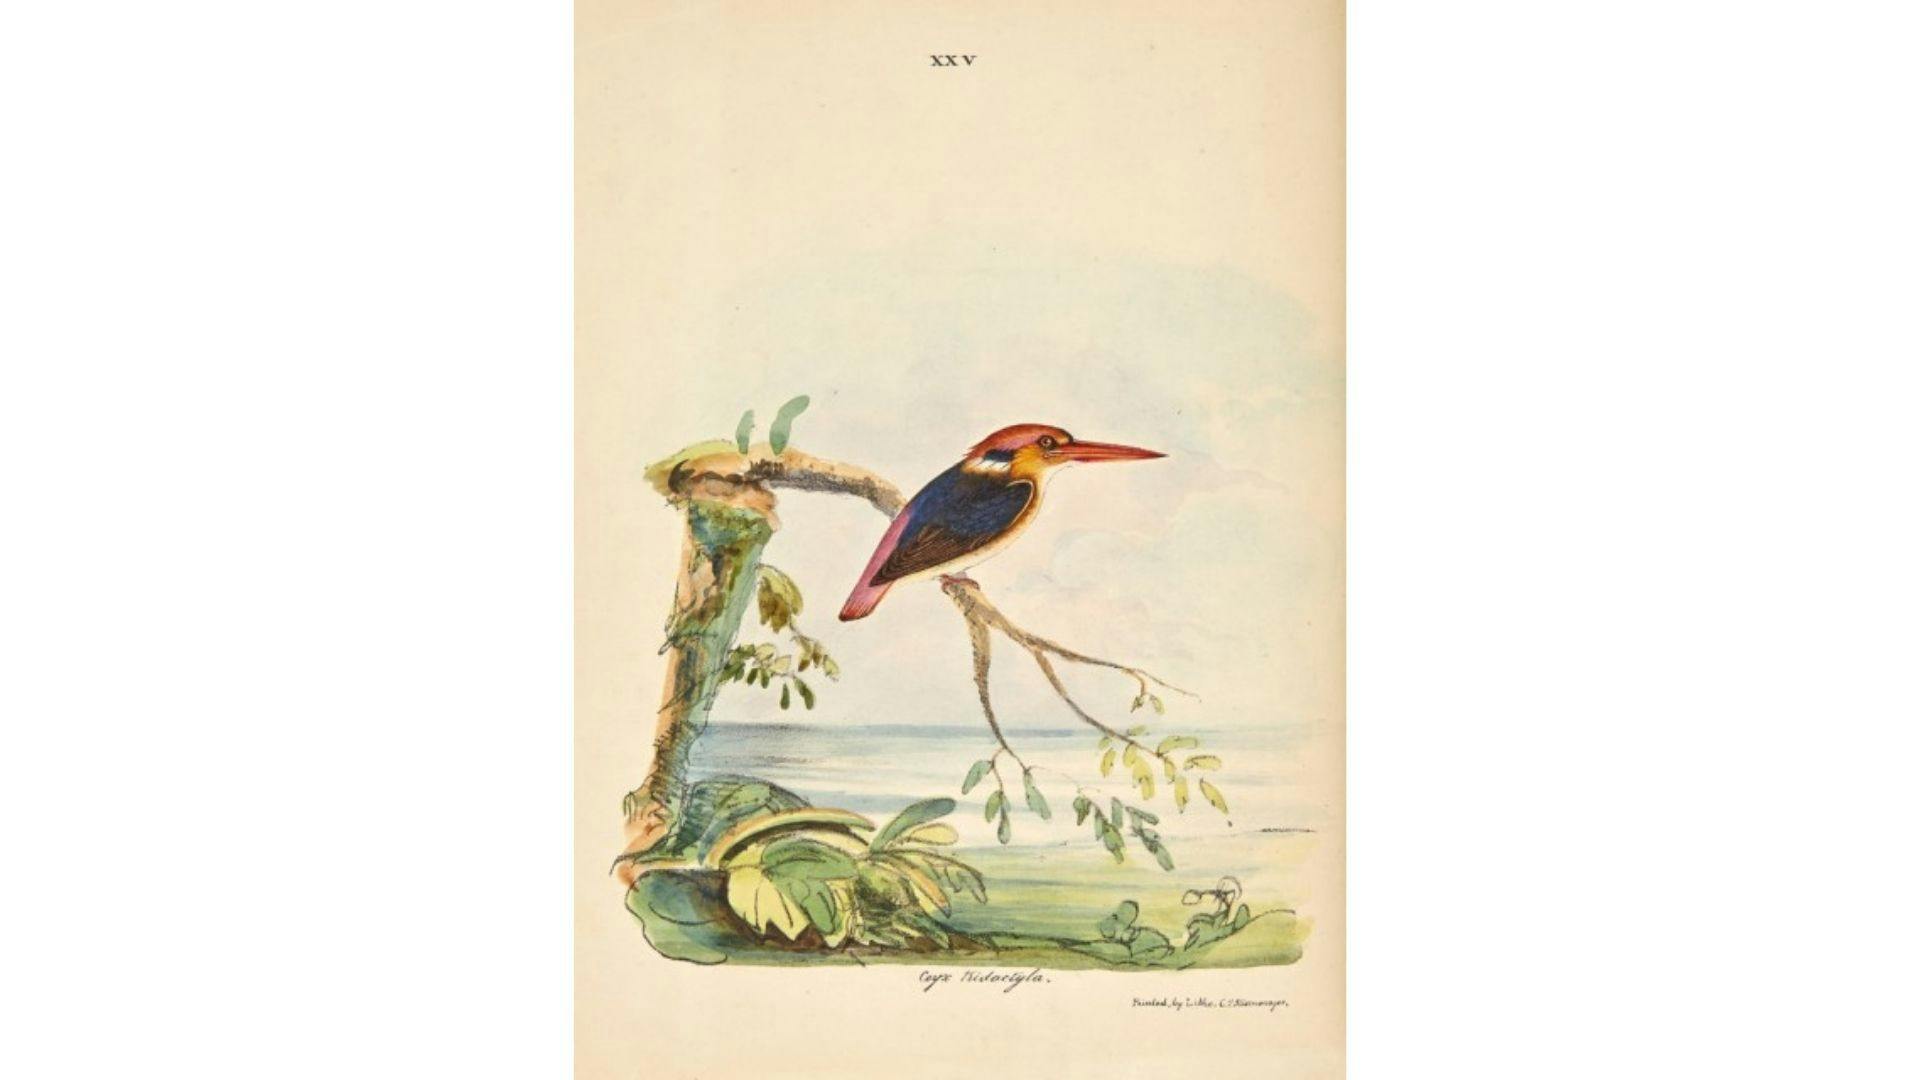 T C Jerdon's book, The Birds of India